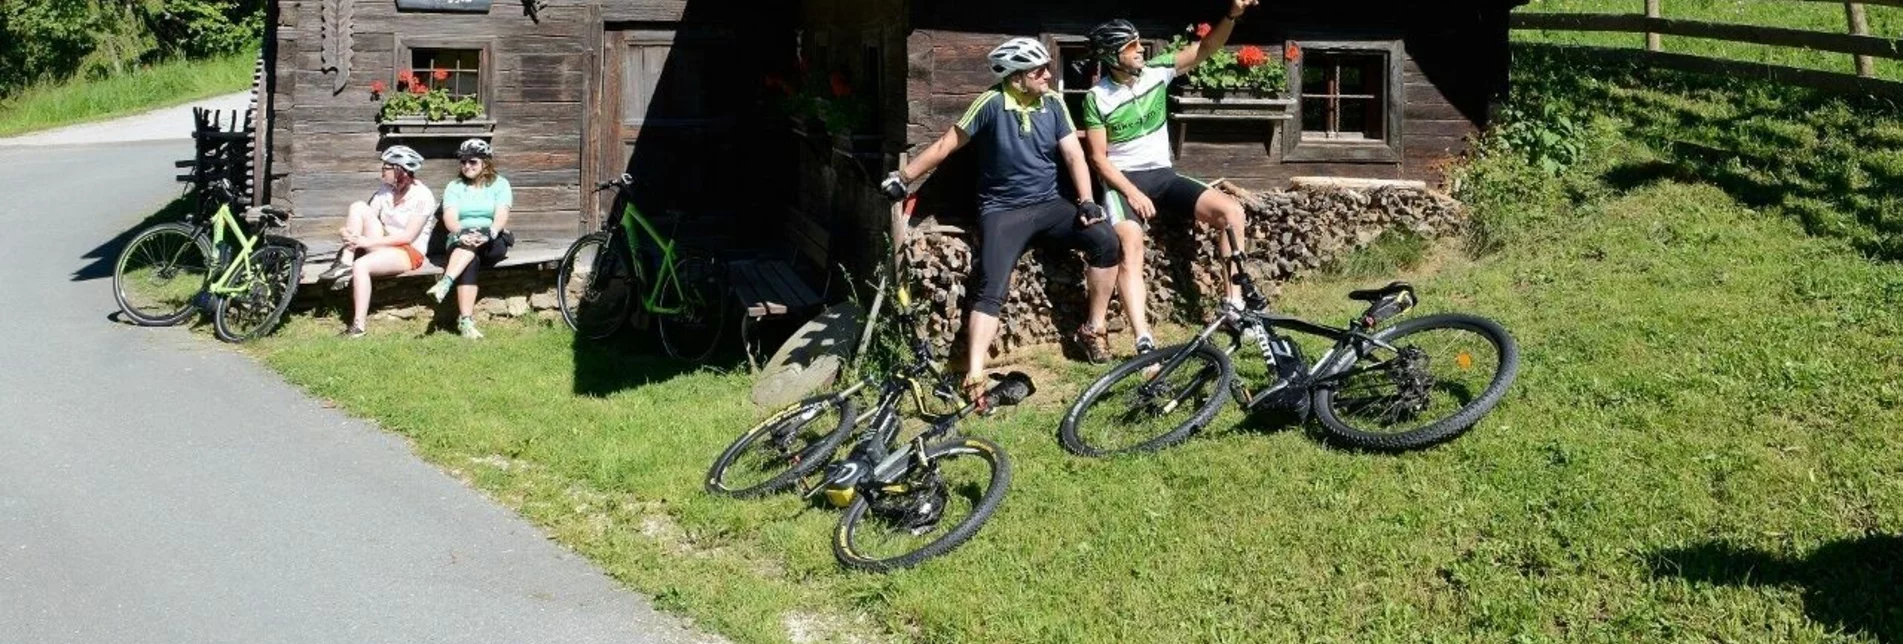 Mountain Biking The great Jogl - starting point Miesenbach - Touren-Impression #1 | © TV Joglland - Waldheimat